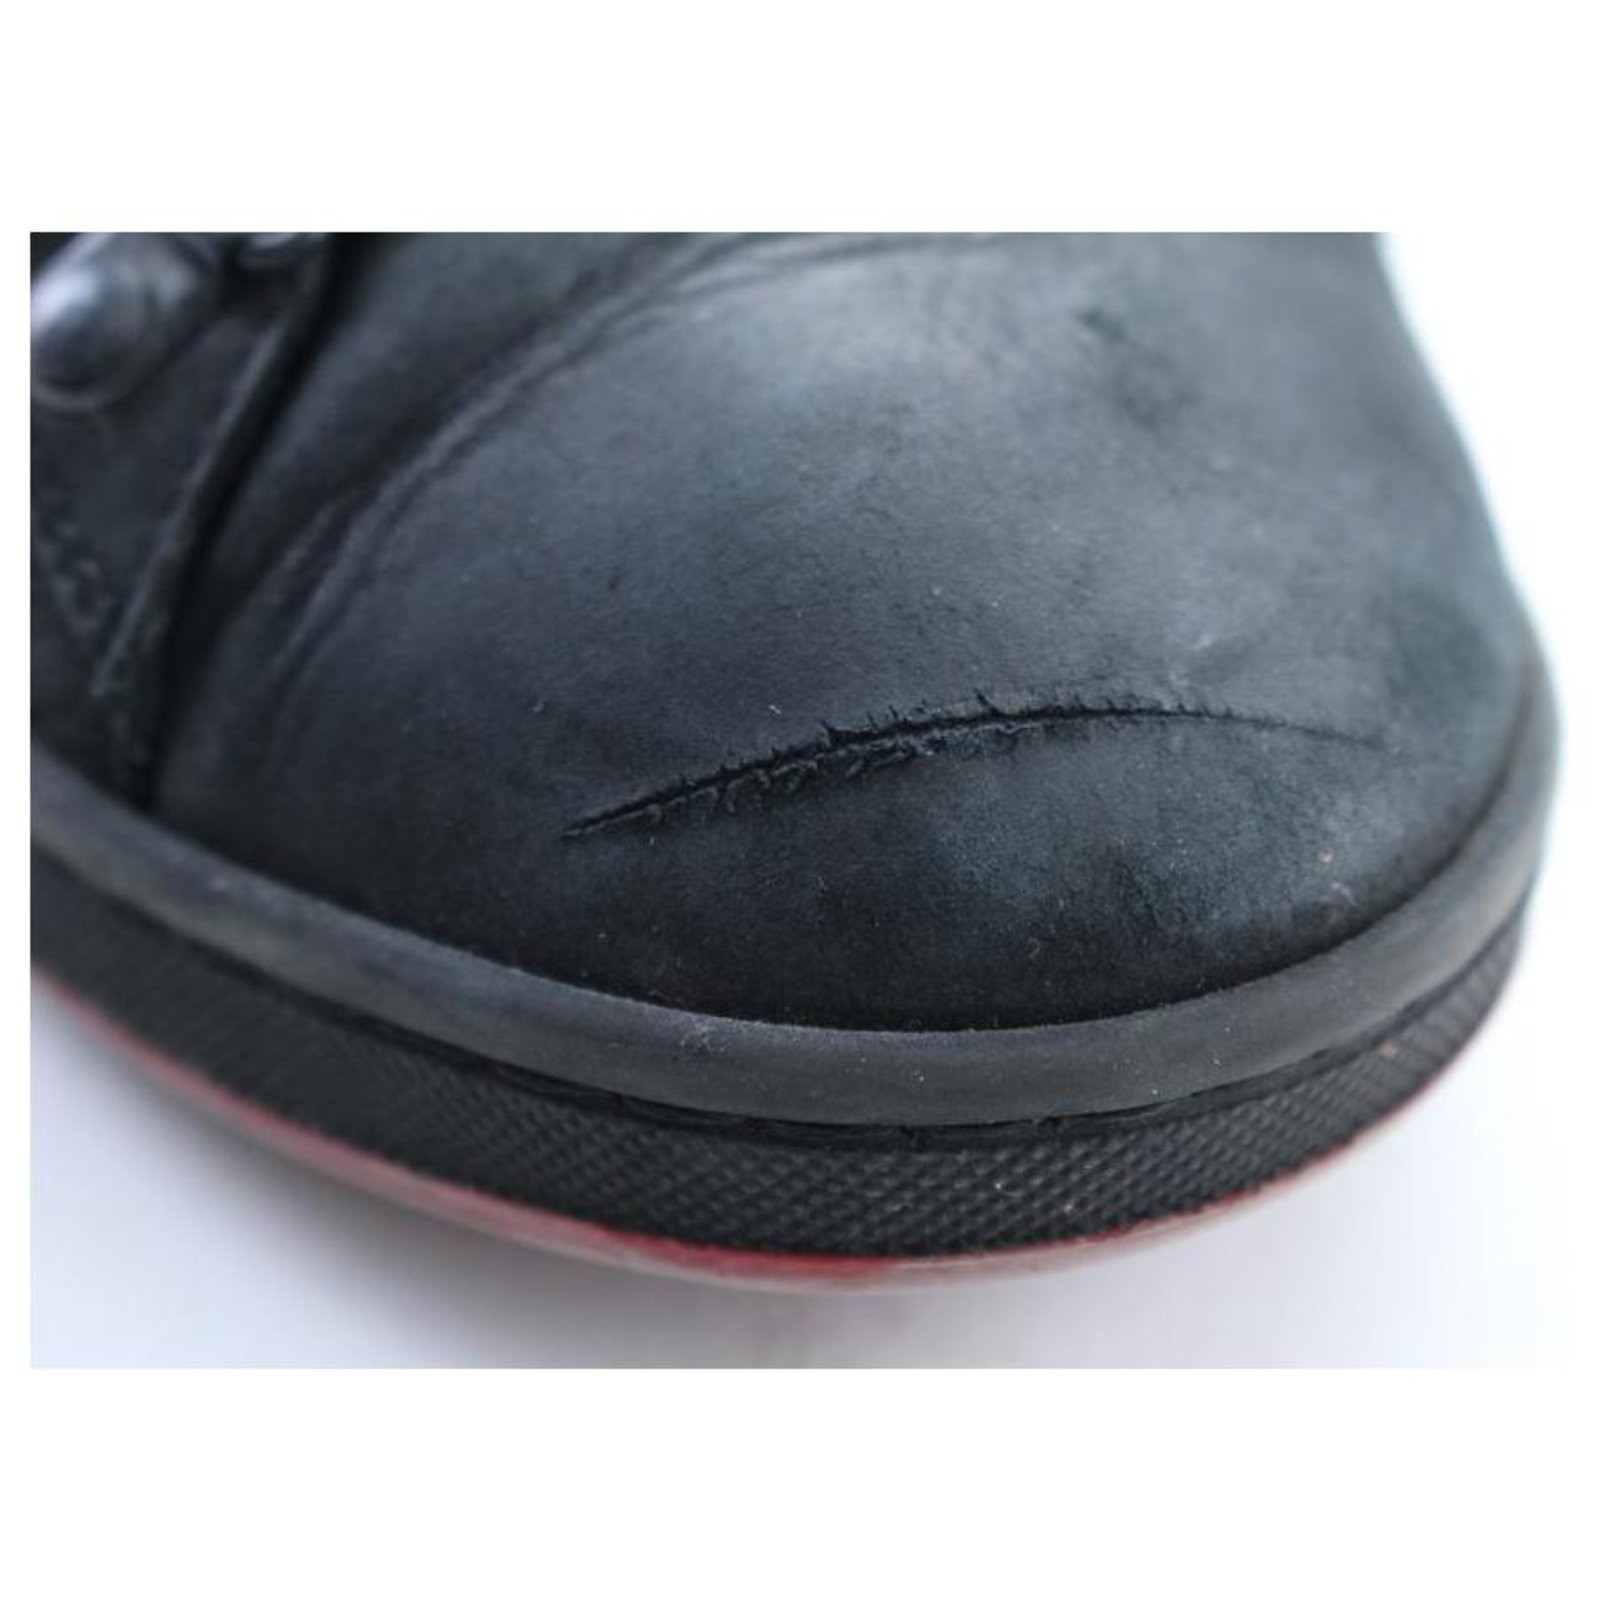 Louis Vuitton MENS US 6.5 Black Nubuck Varsity Sneaker Leather ref